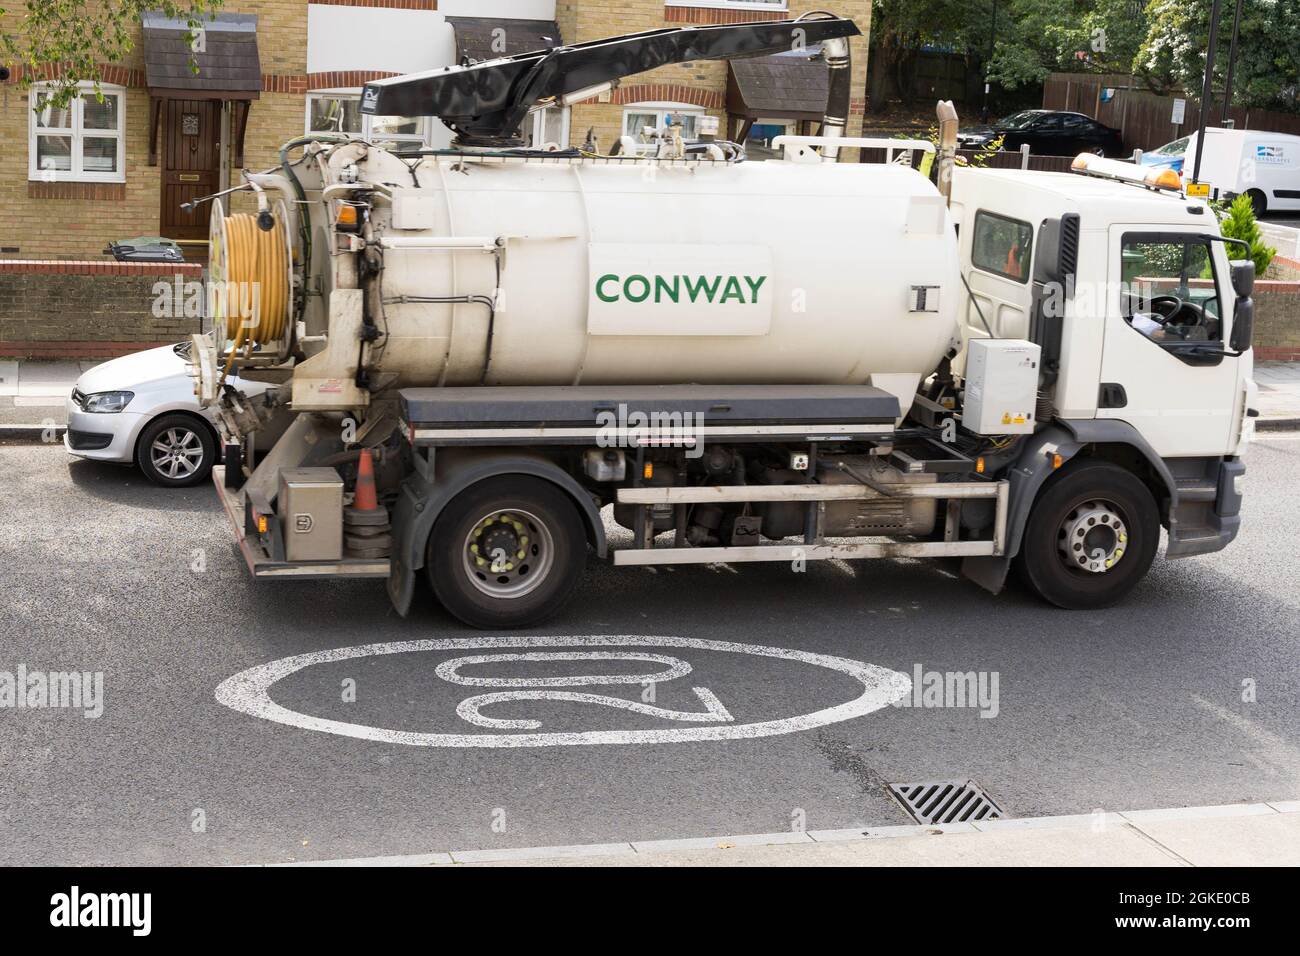 https://c8.alamy.com/comp/2GKE0CB/conway-liquid-waste-management-drain-cleaning-london-england-2GKE0CB.jpg